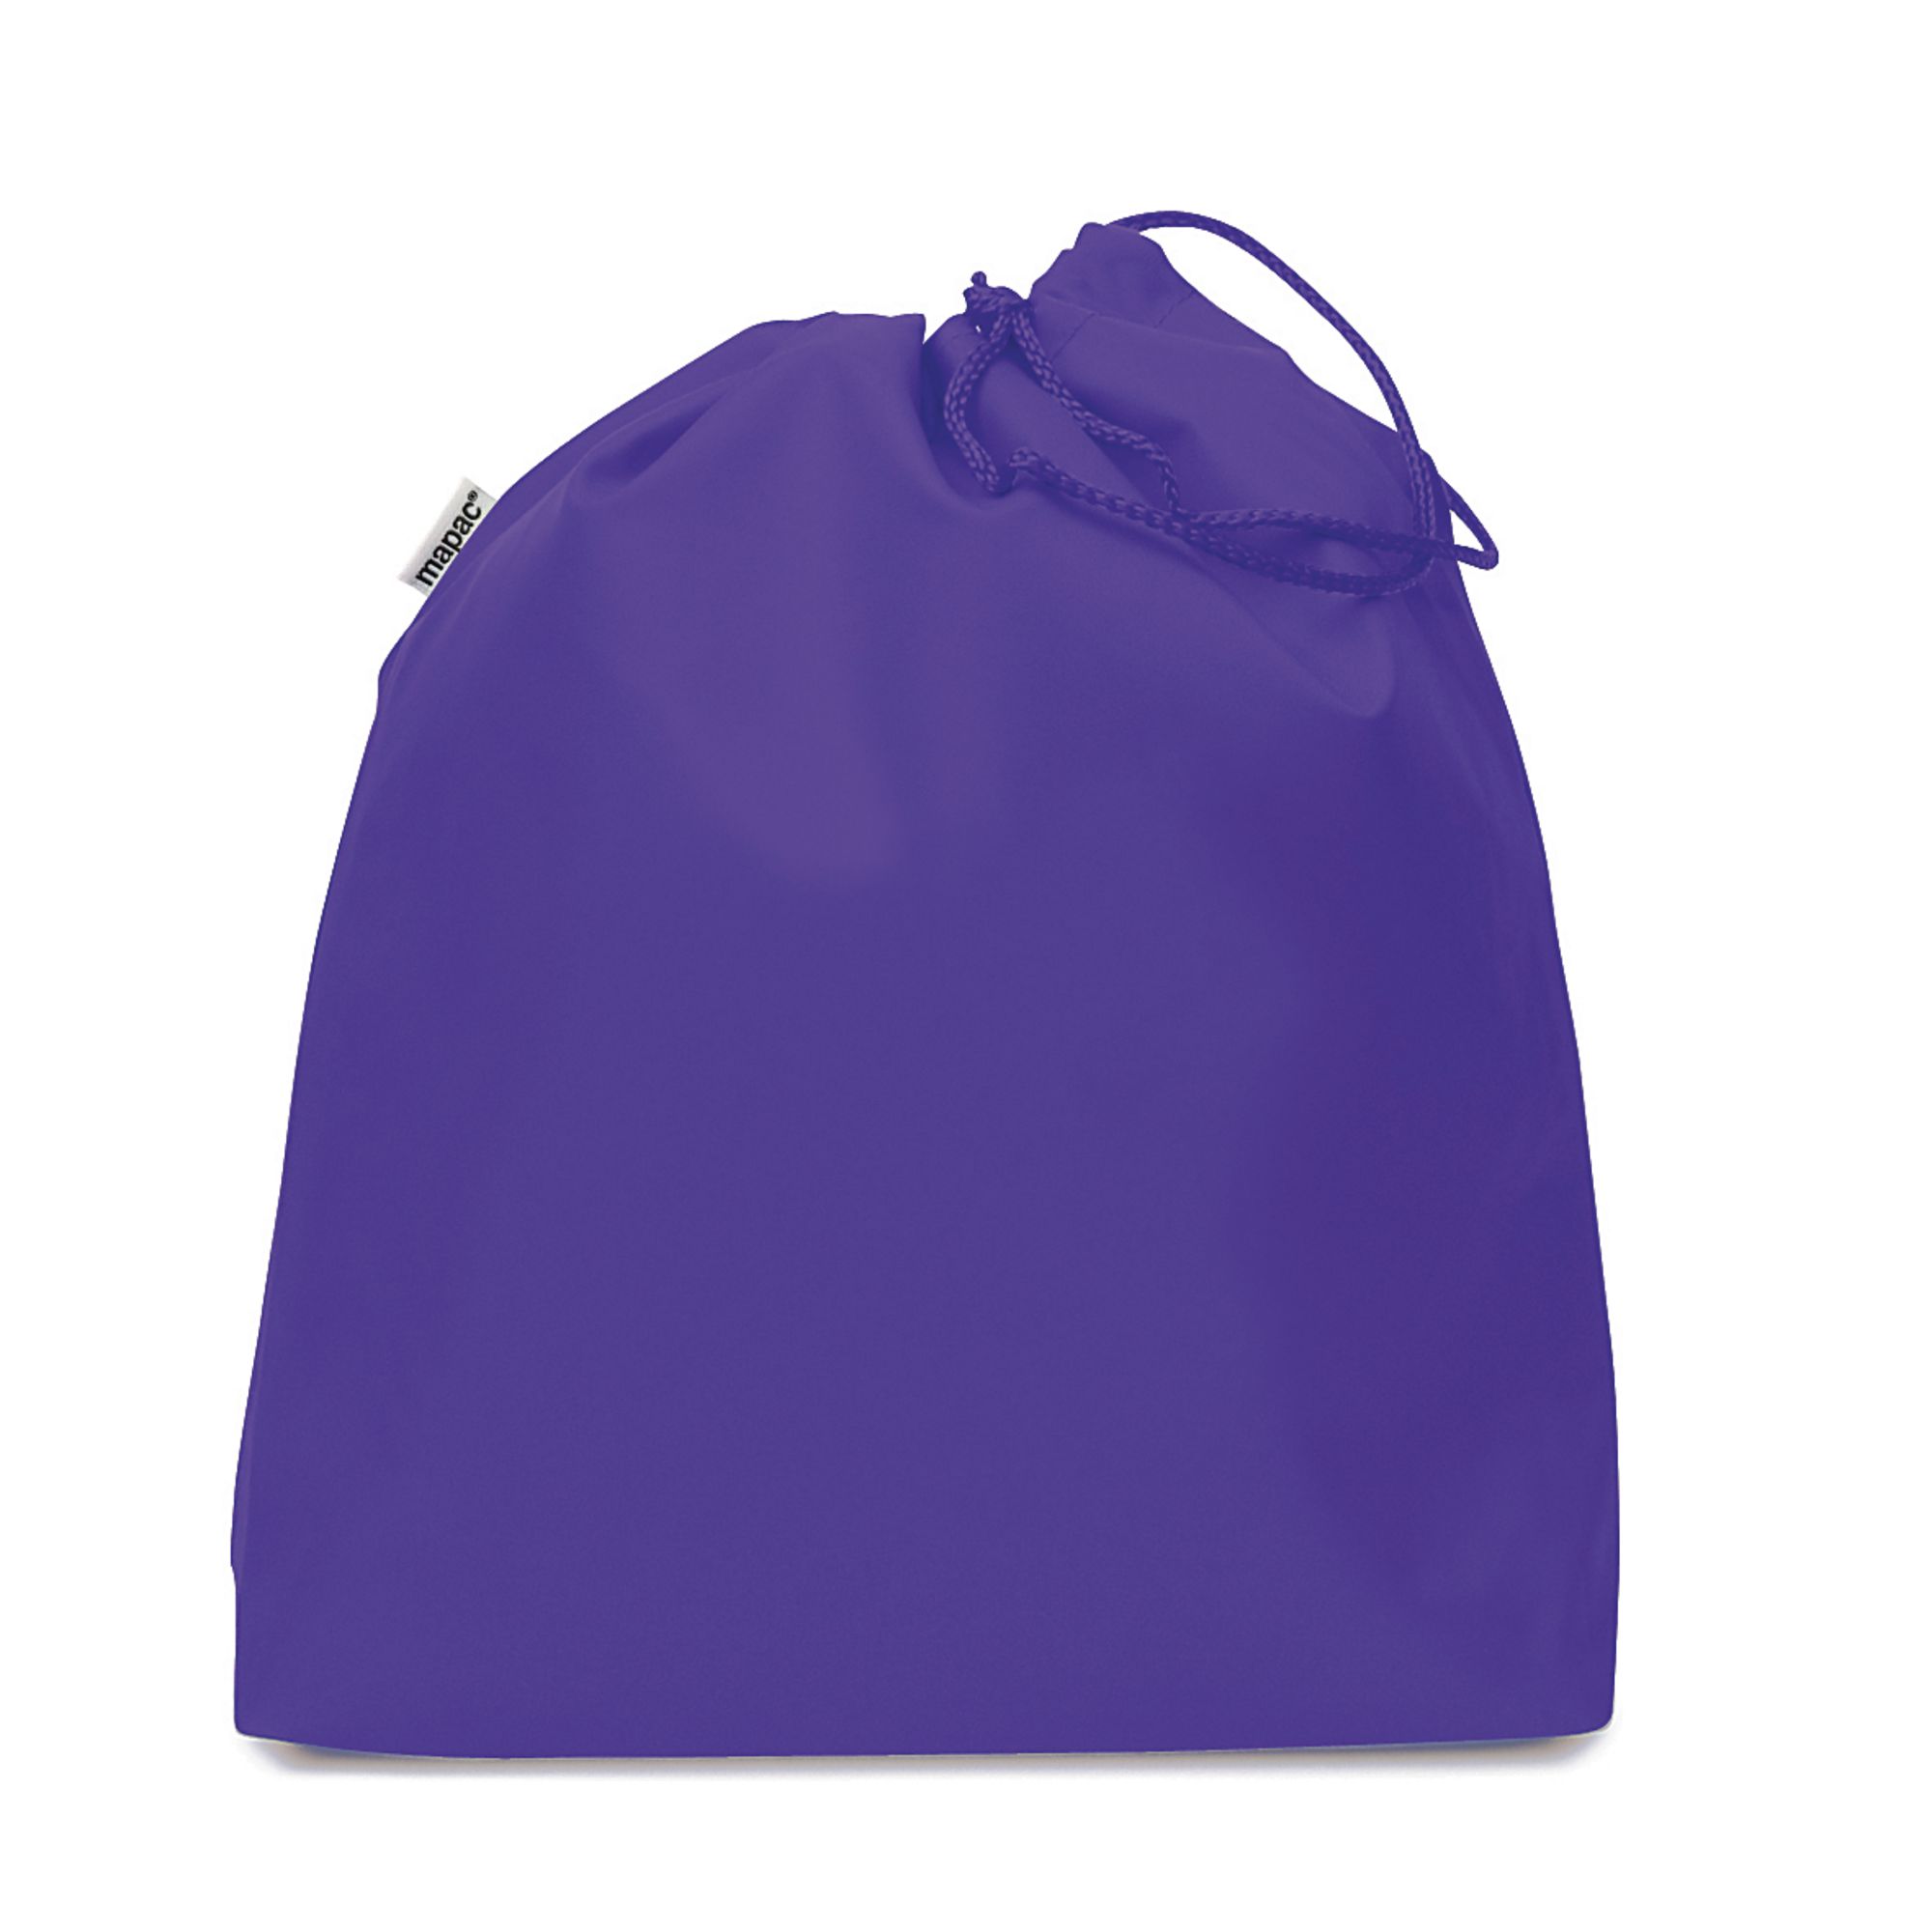 purple gym bag